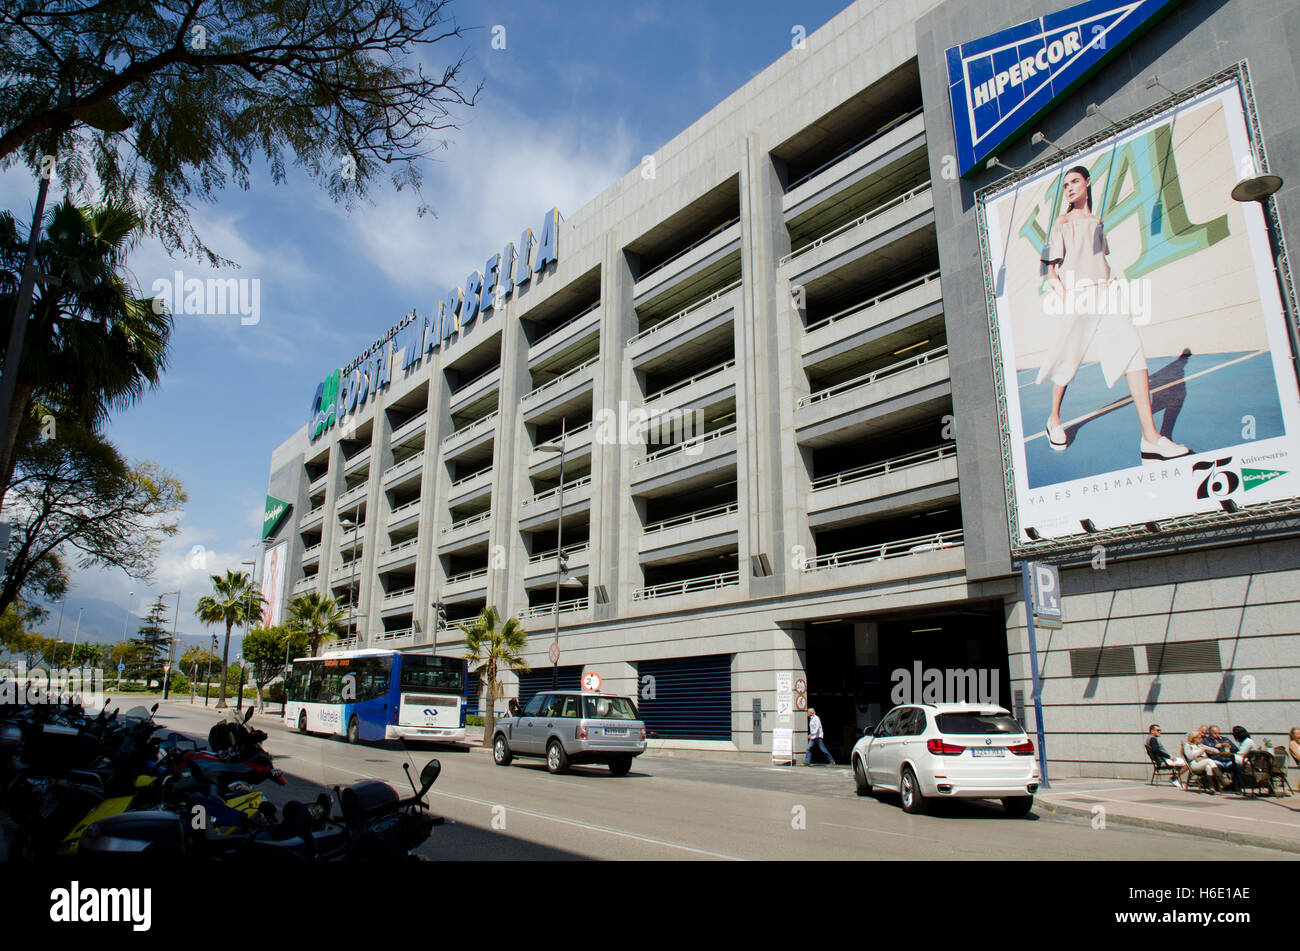 El Corte Ingles Carpark in Puerto Banus Stock Photo - Alamy